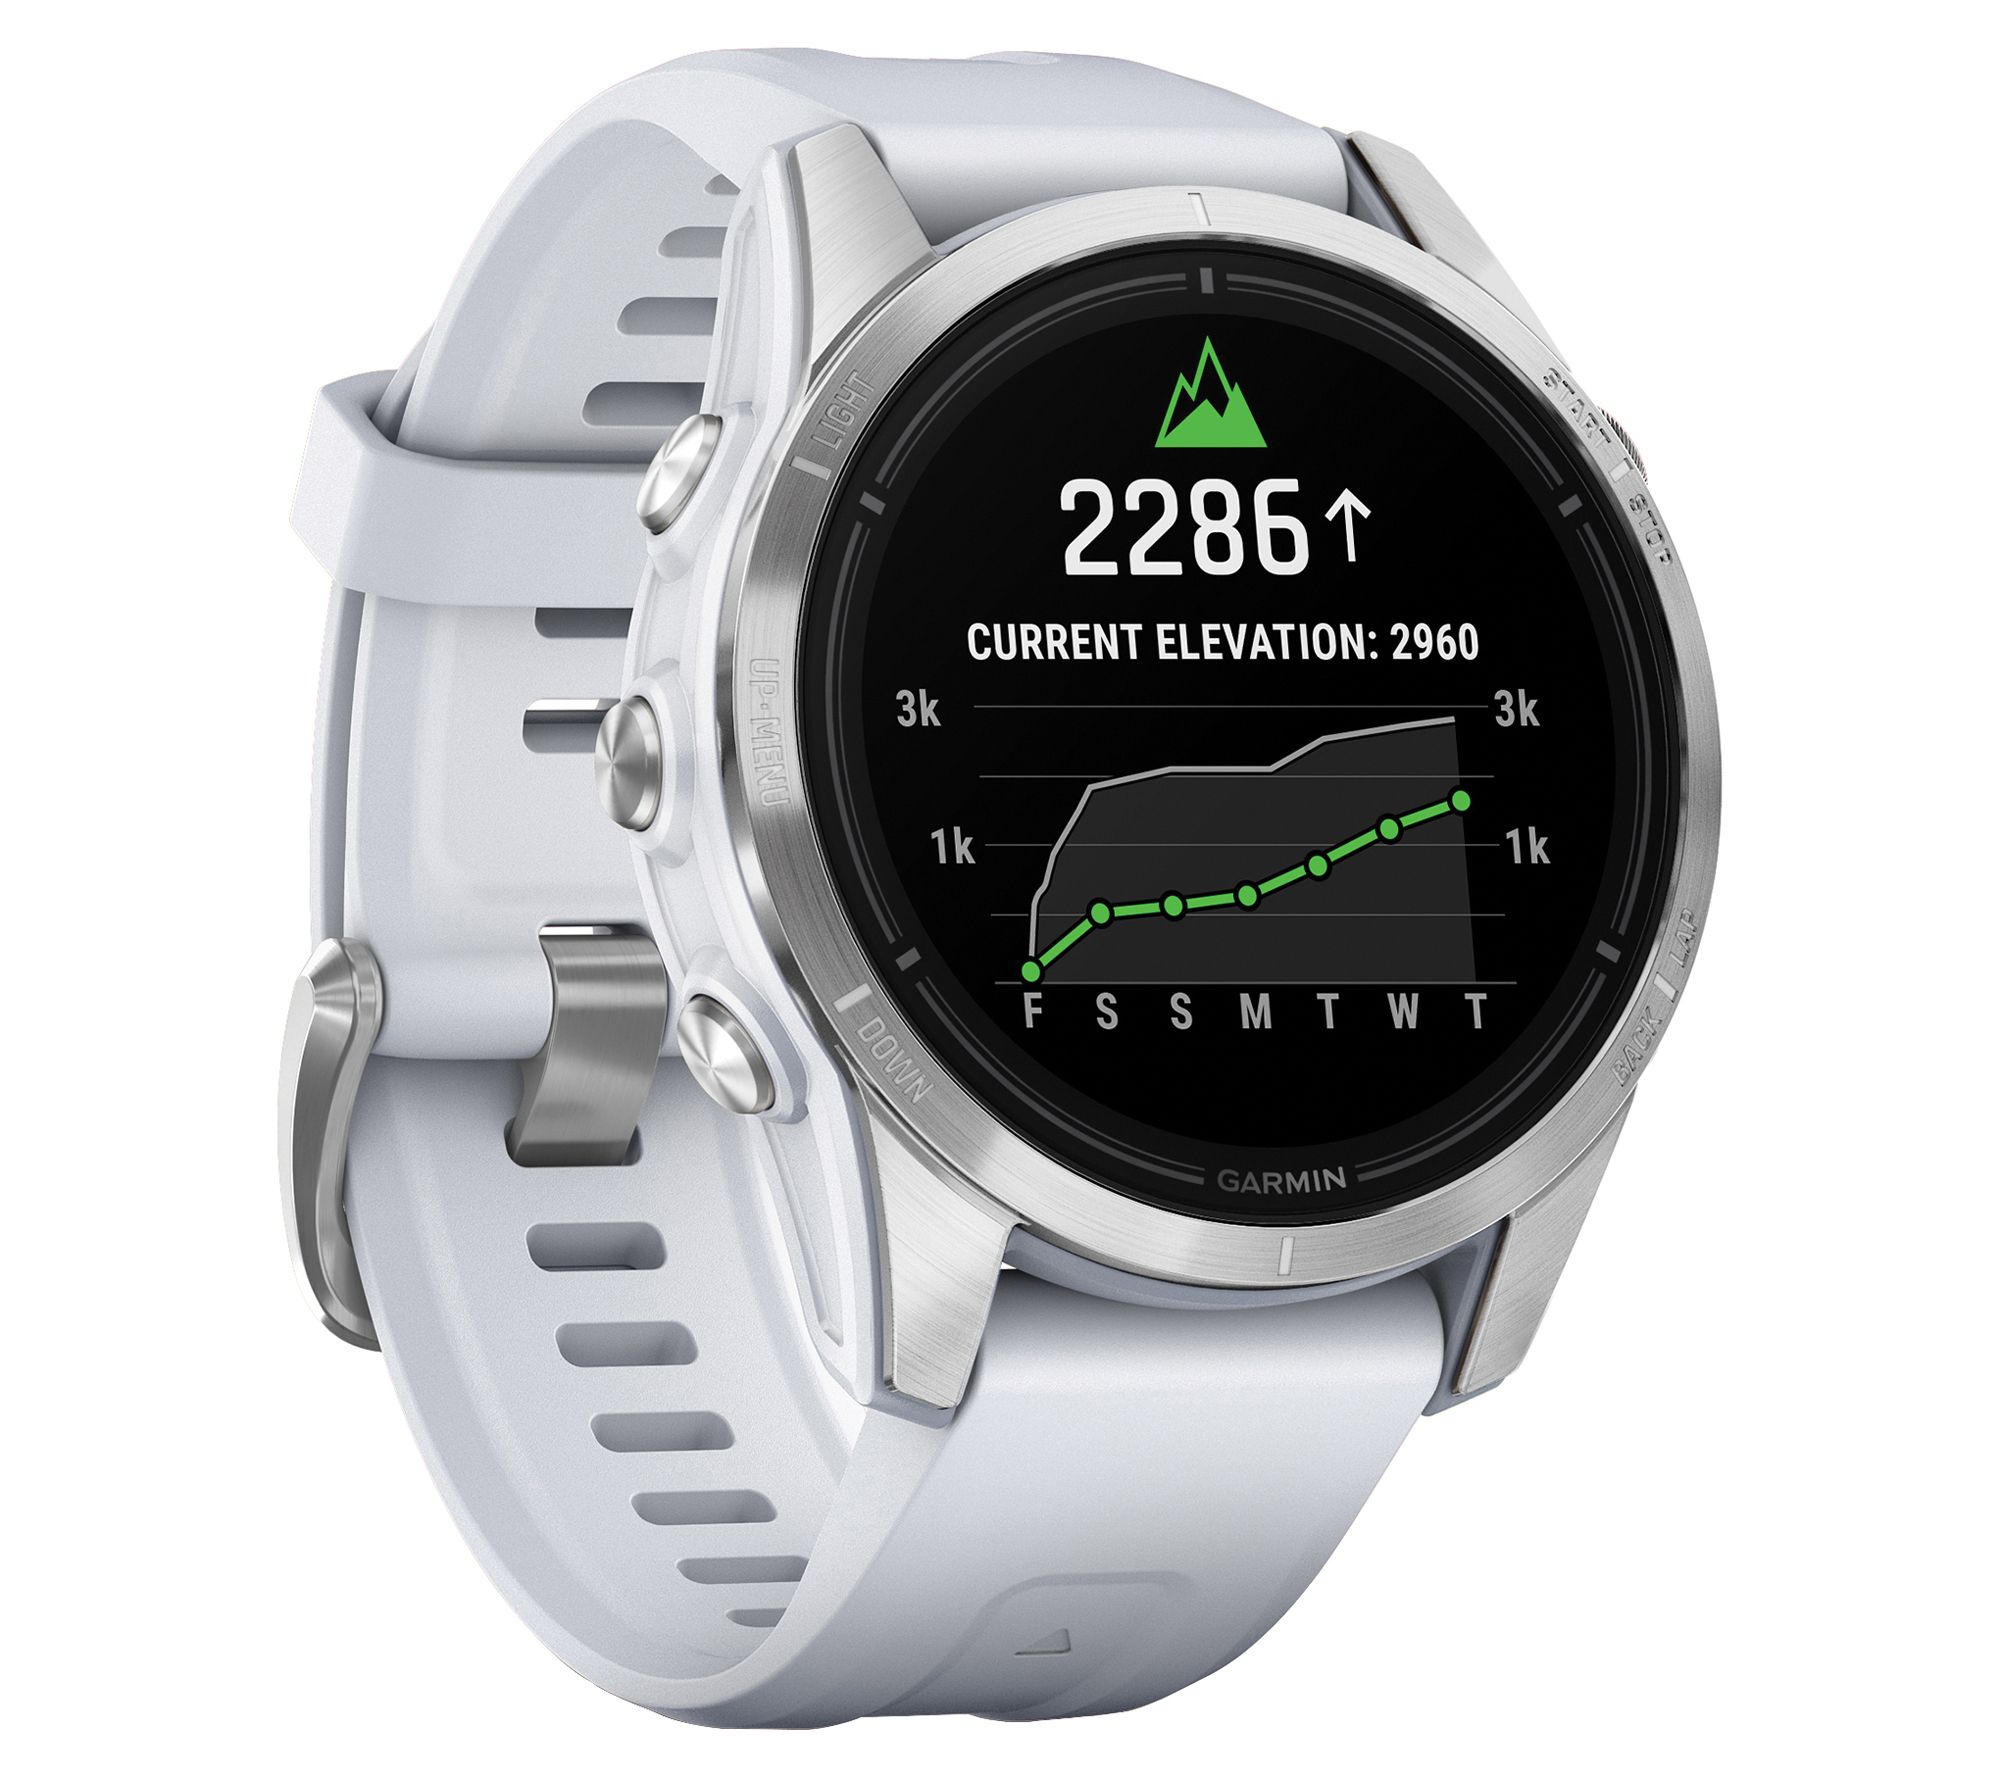 Garmin Epix Gen 2 review – Top AMOLED adventure smartwatch